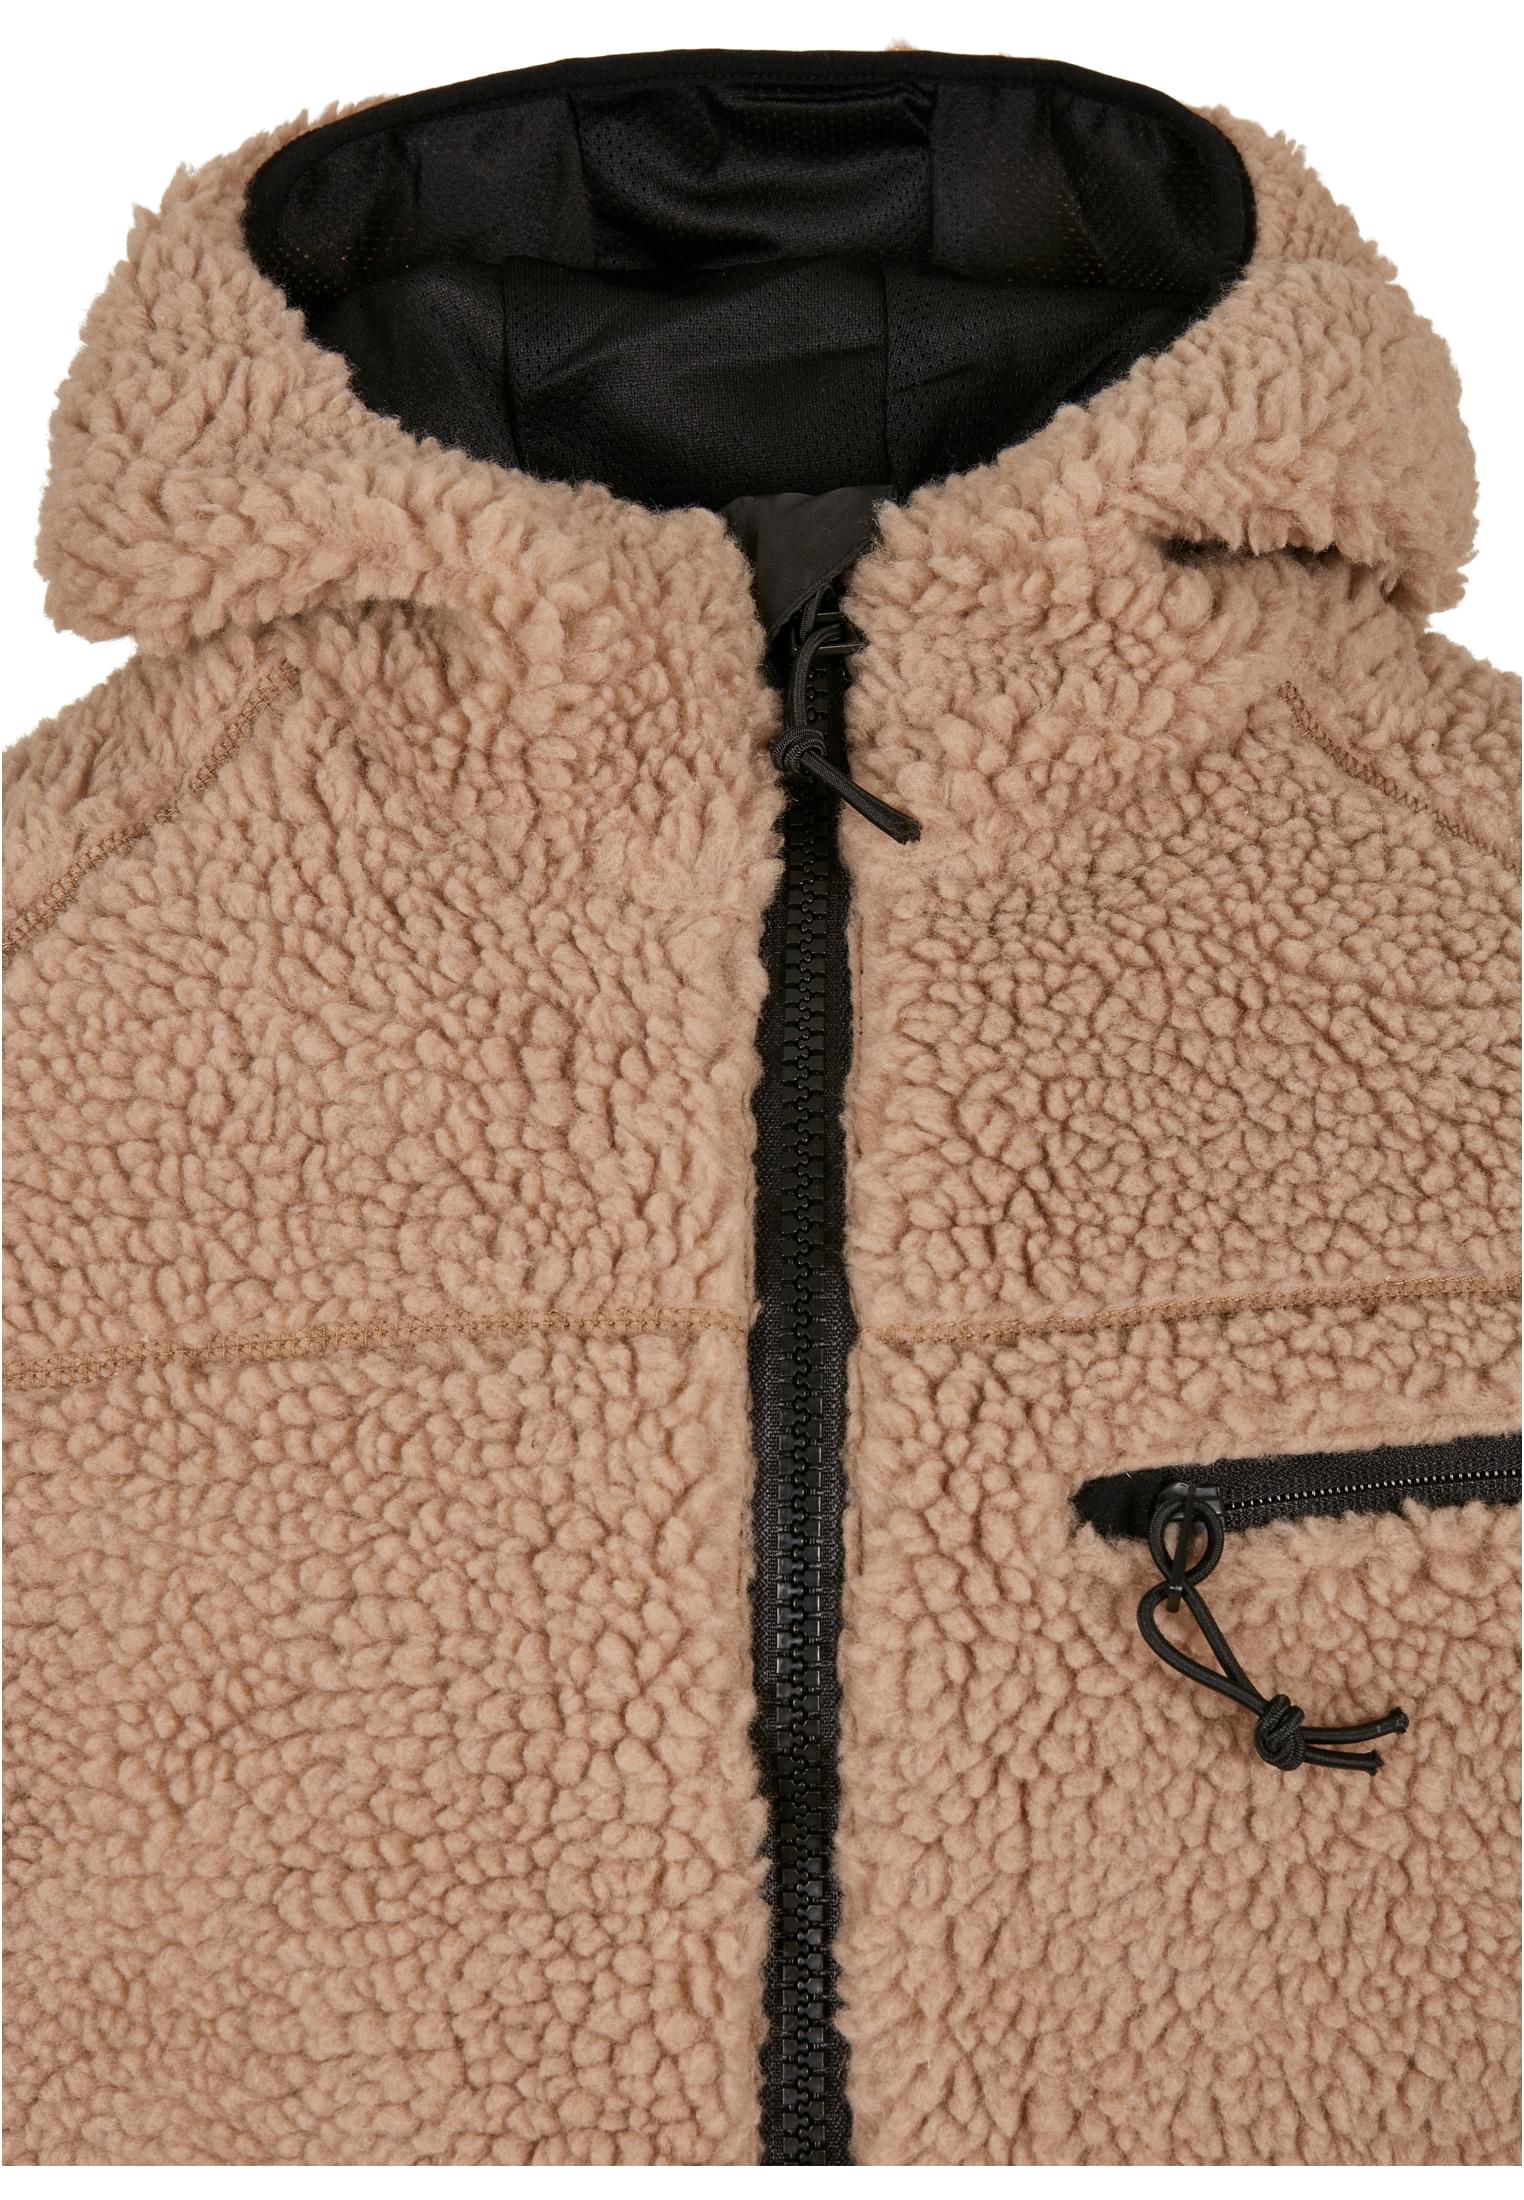 Pullover Teddyfleece Worker Jacket in Farbe camel